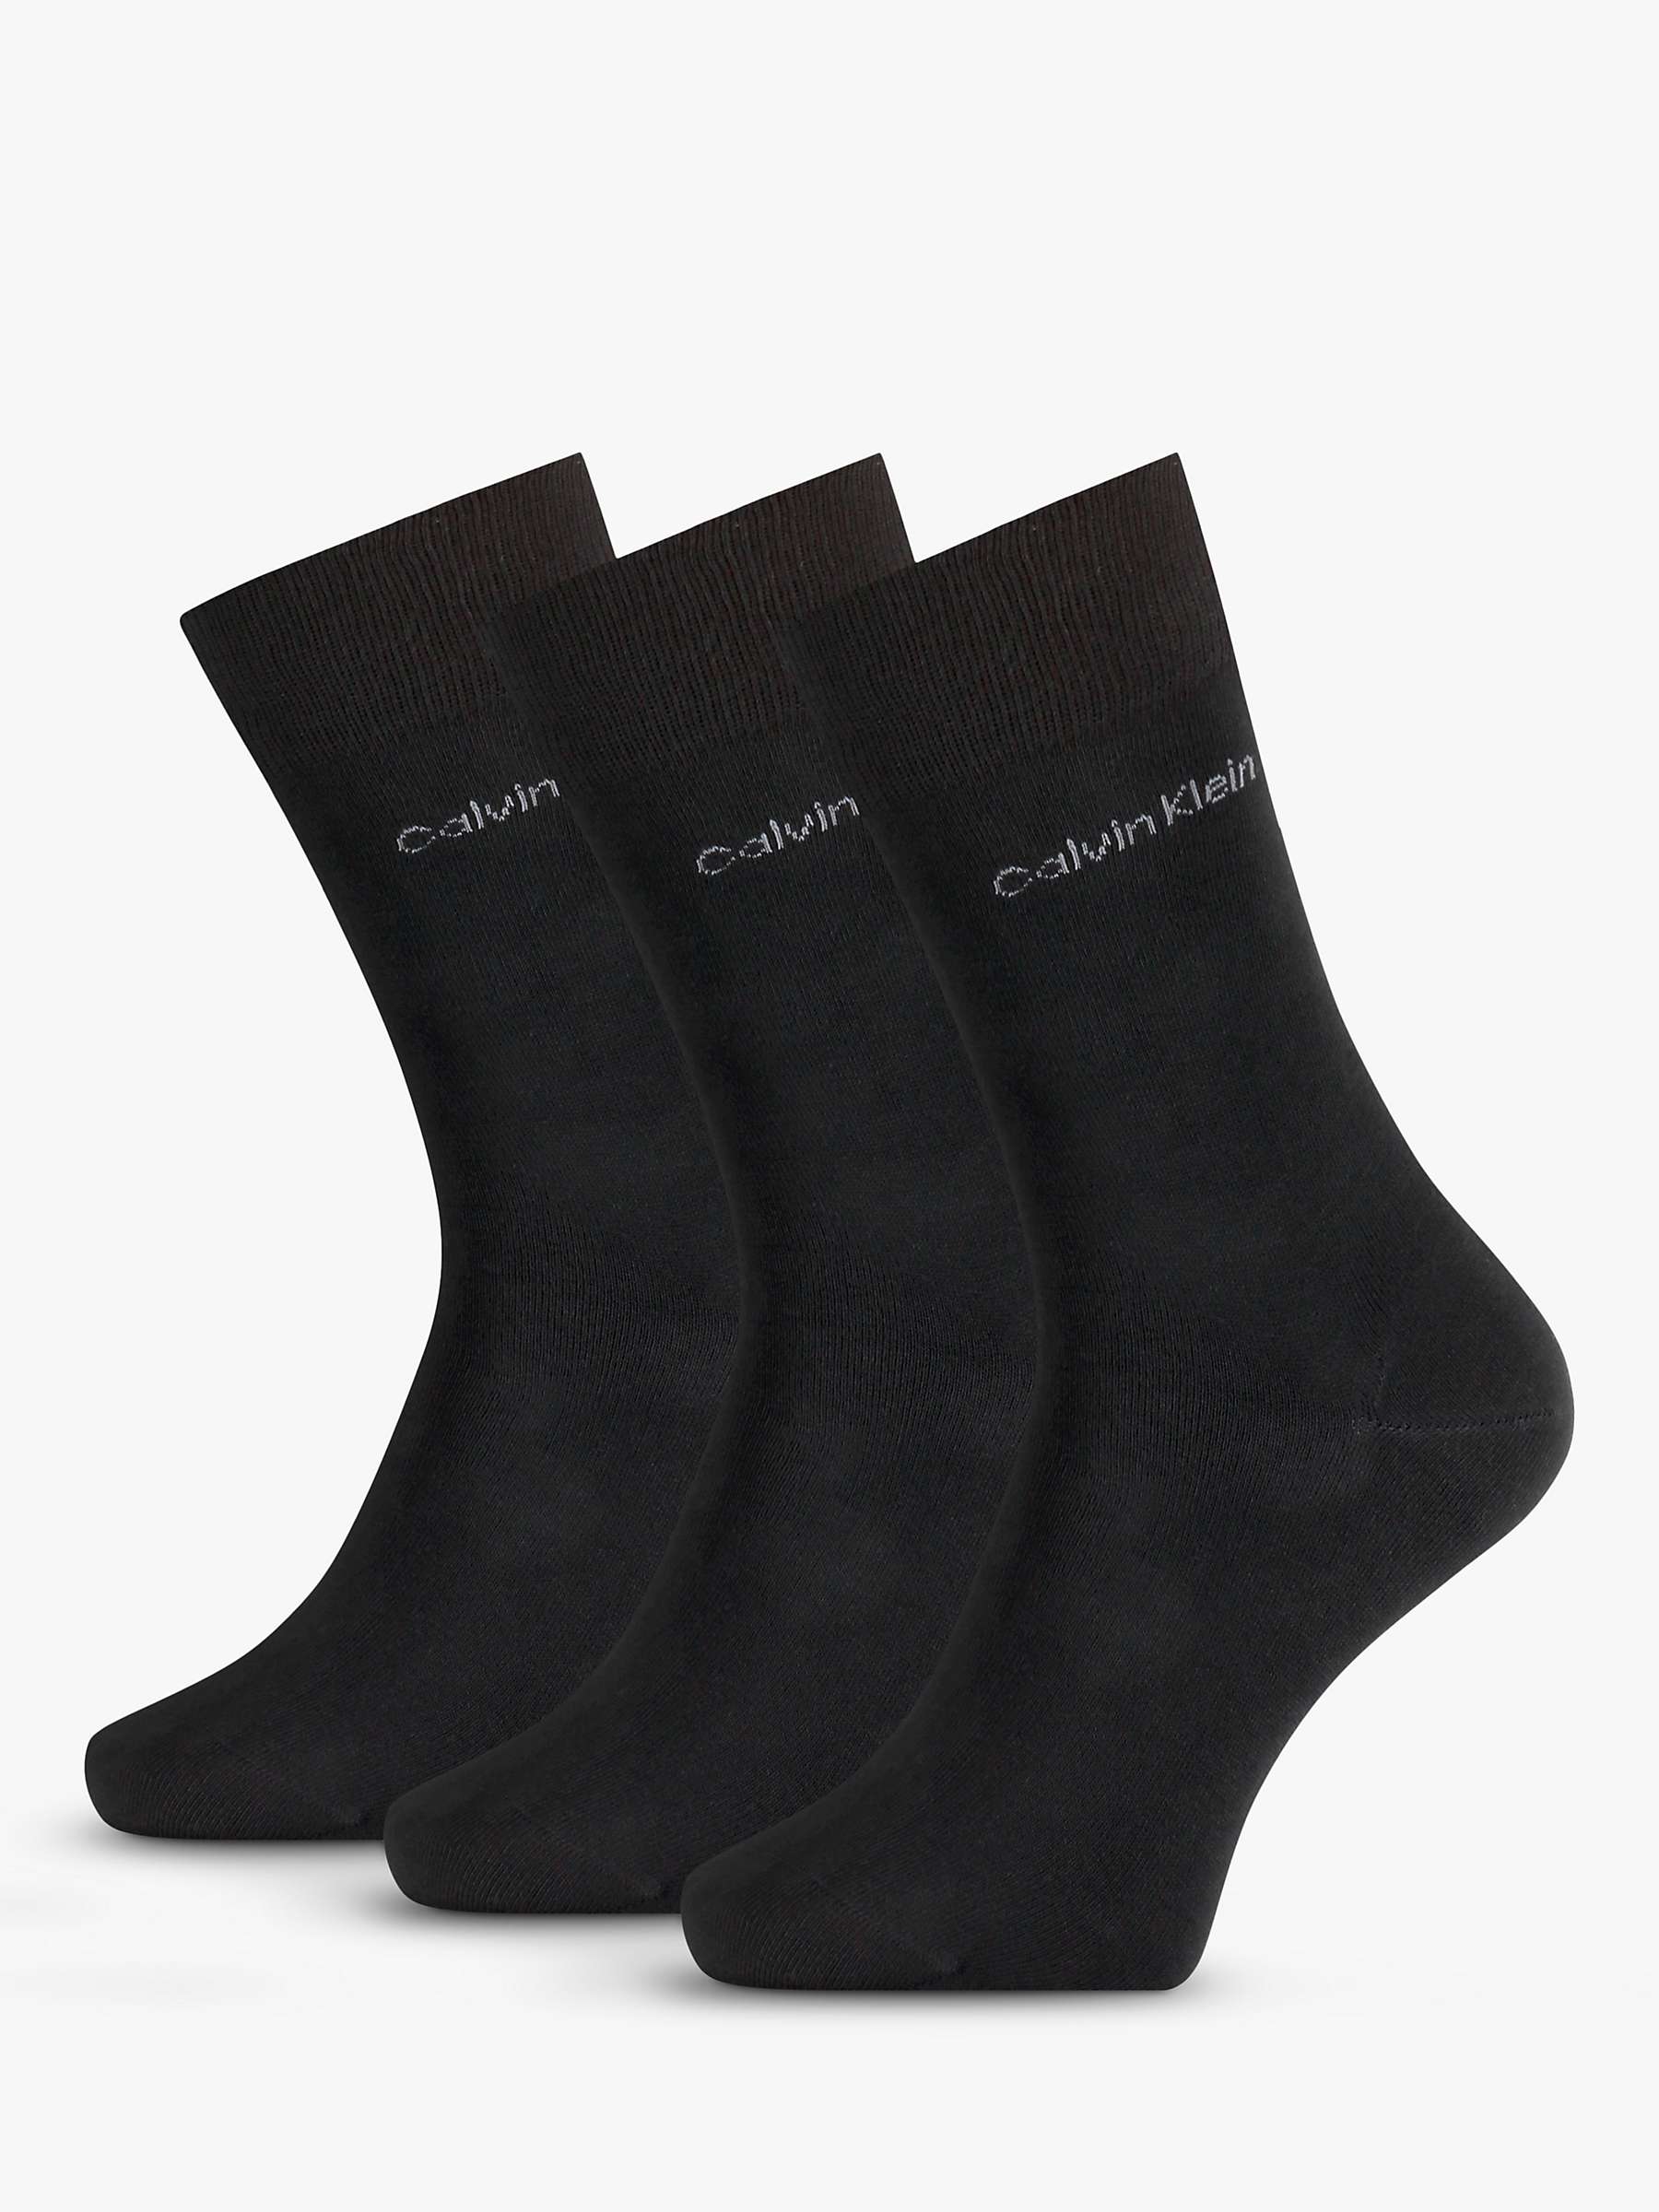 Buy Calvin Klein Logo Socks, One Size, Pack of 3, Black Online at johnlewis.com